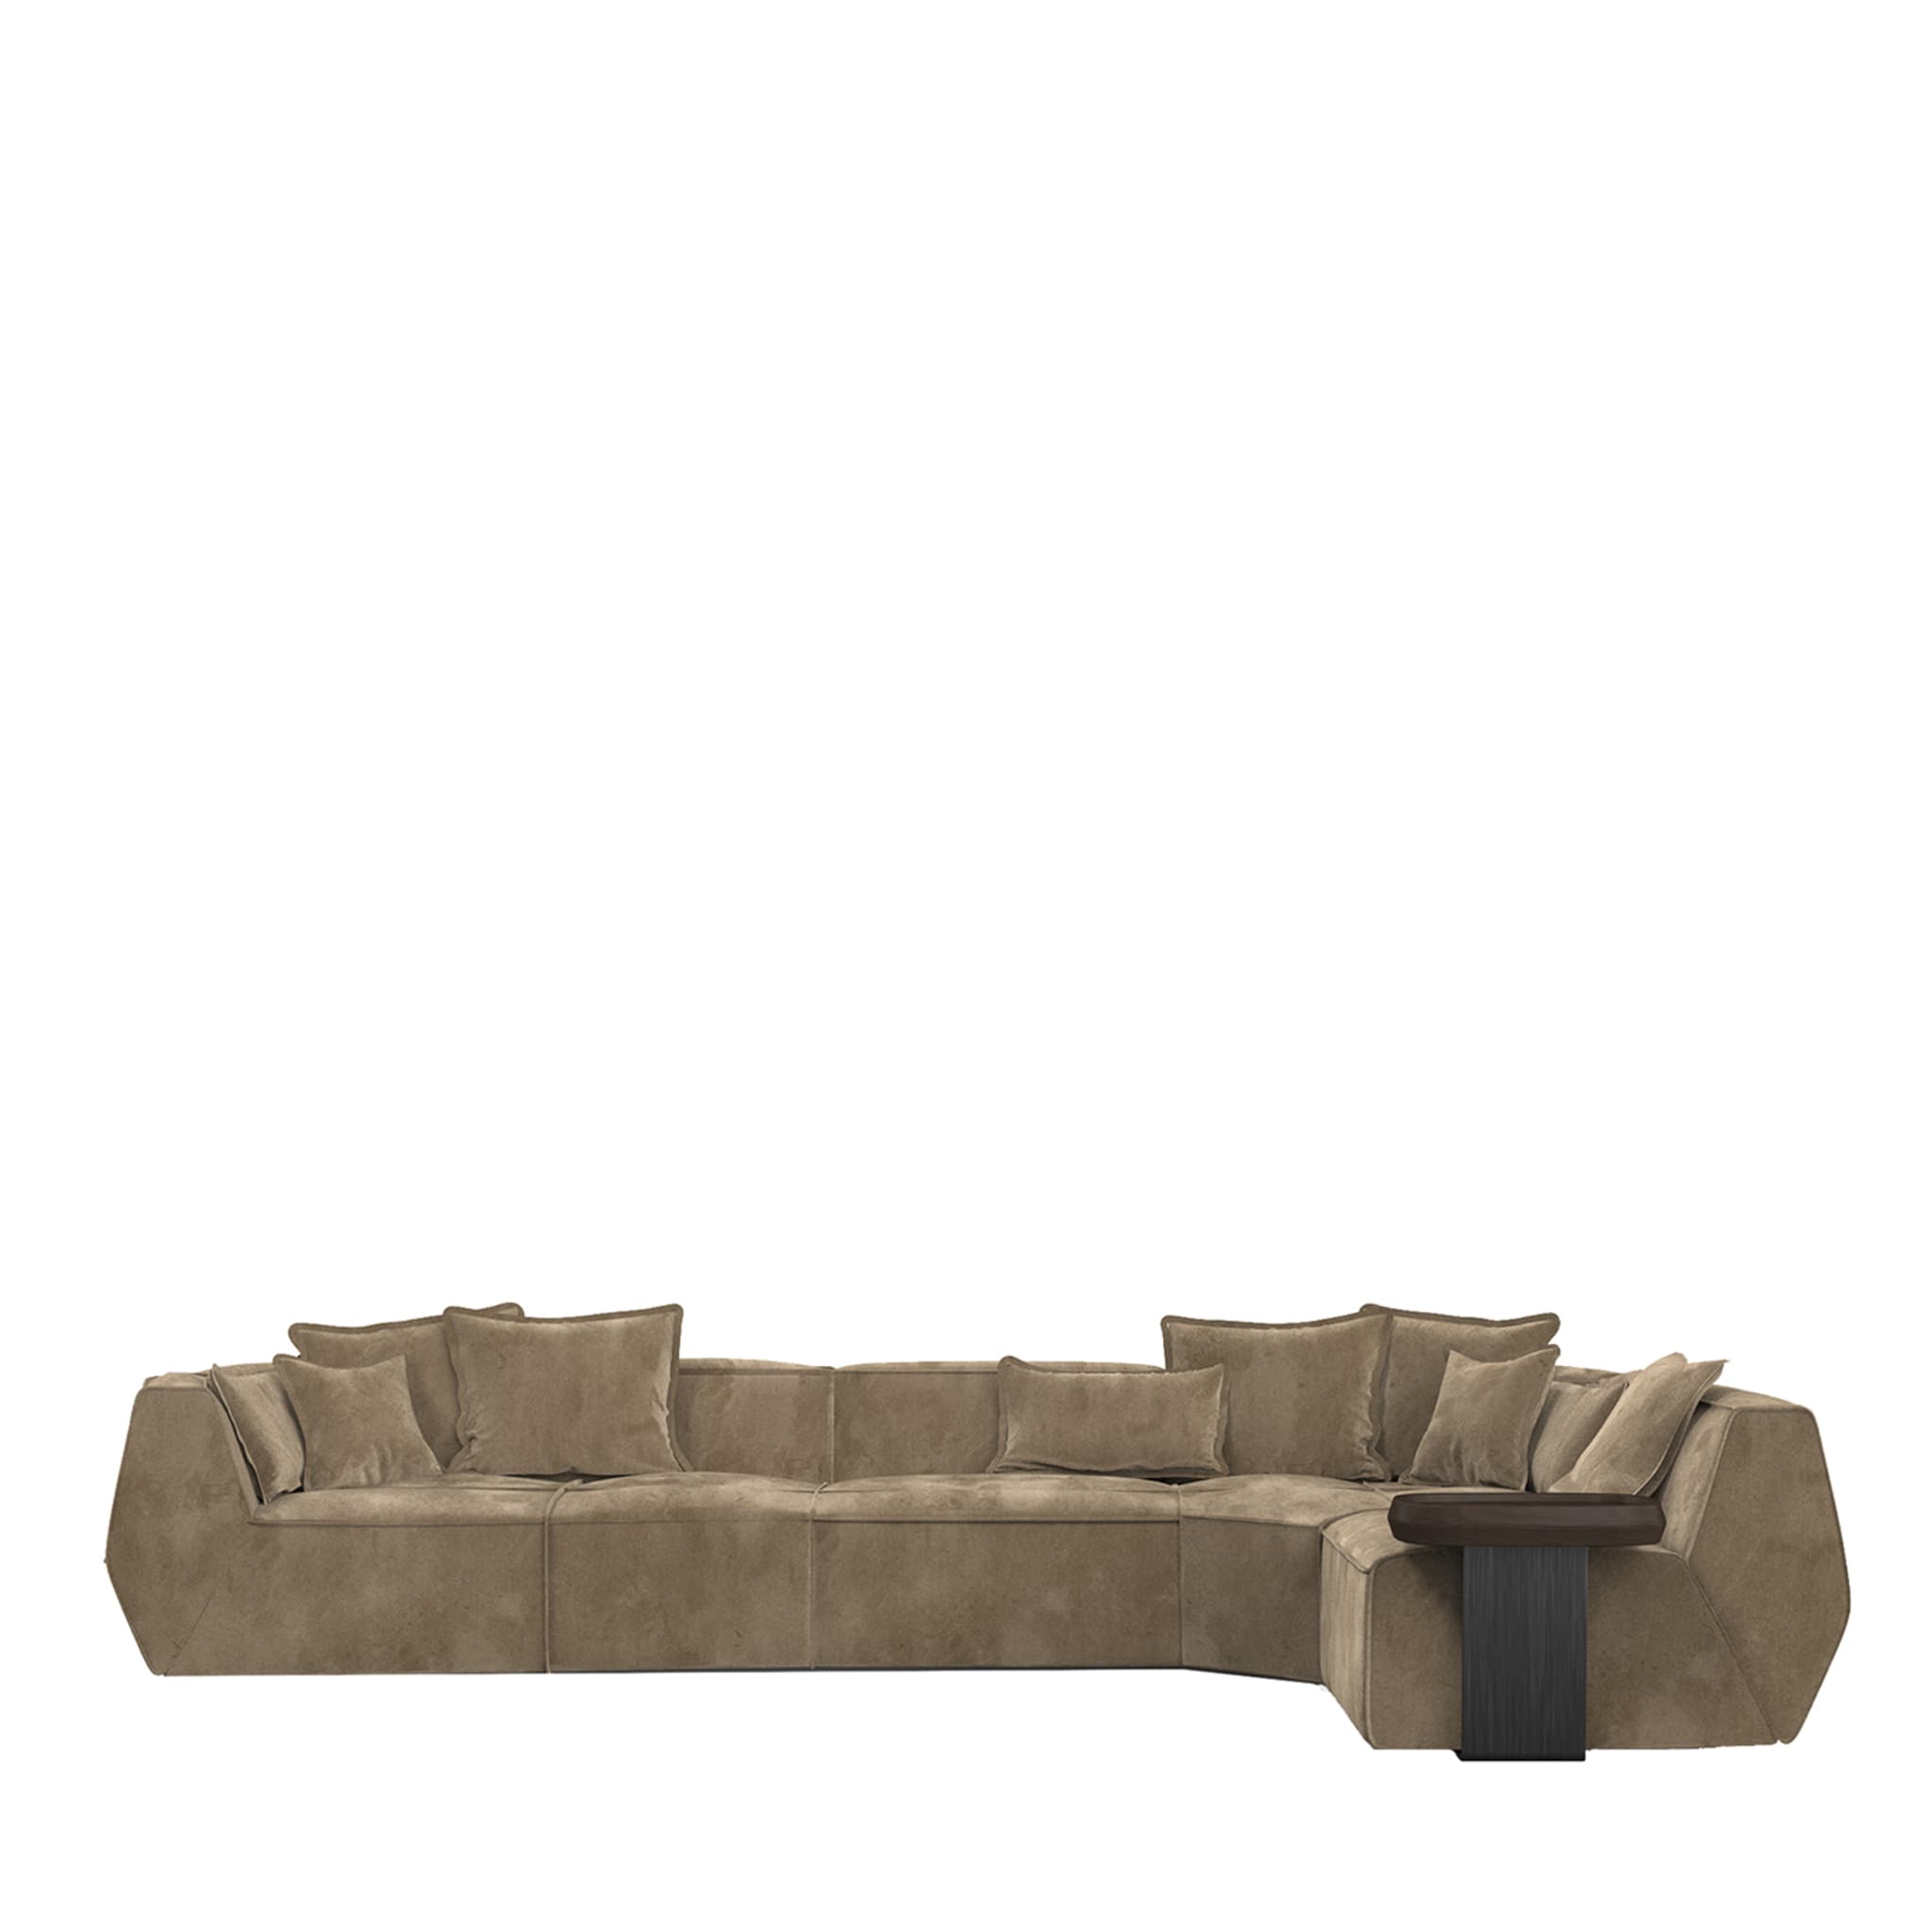 Infinito Taupe Leather Sofa by Lorenza Bozzoli - Main view